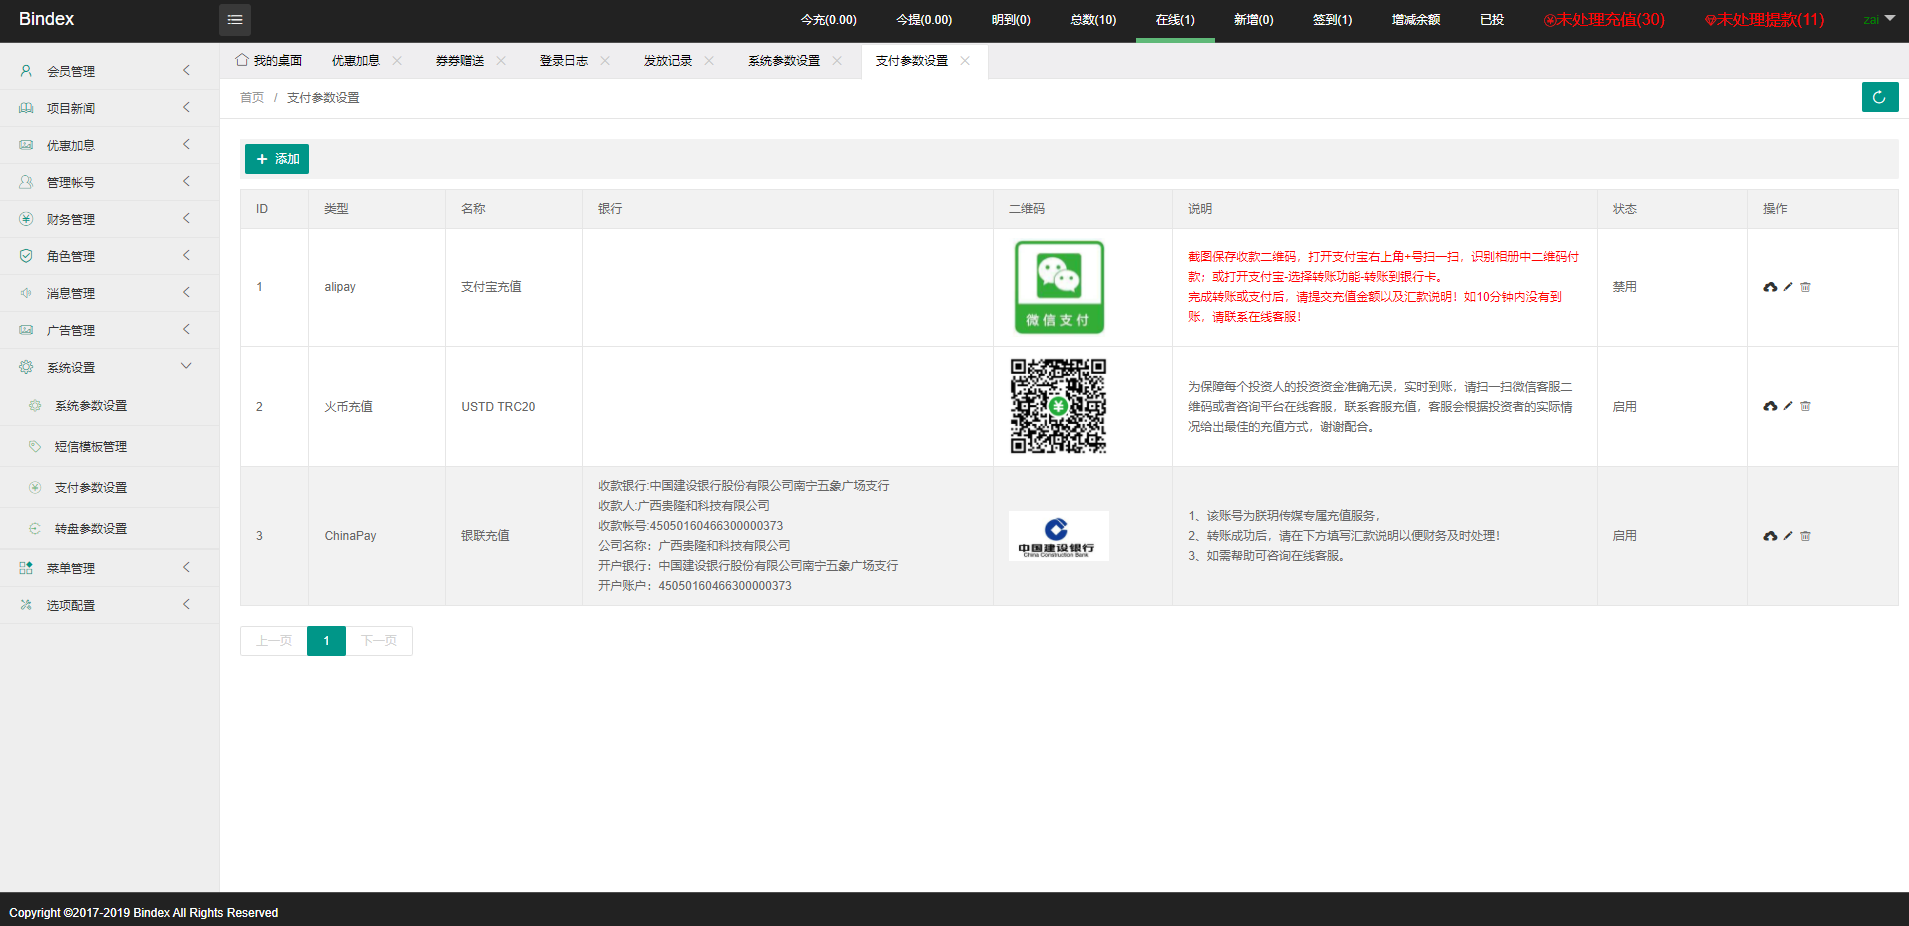 B0487-全新影视投资 日语投资系统源码，同时支持虚拟币充值 在线客服和优惠券功能